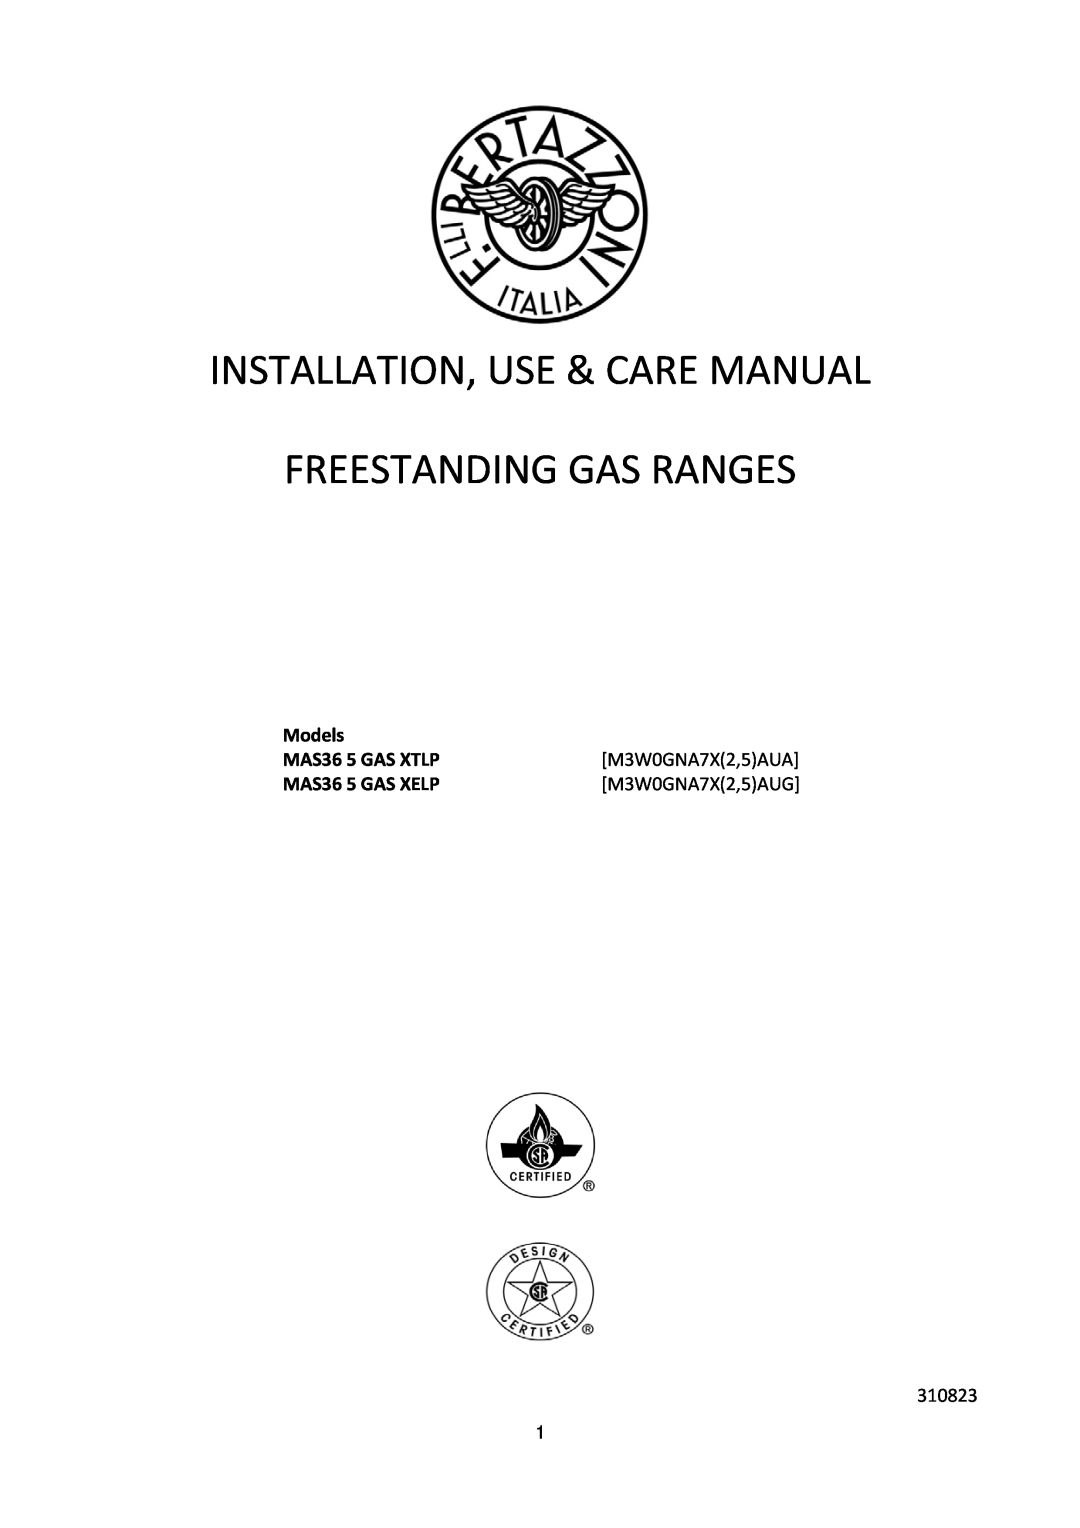 Bertazzoni MAS365GASXTLP manual Installation, Use & Care Manual Freestanding Gas Ranges, Models, MAS36 5 GAS XTLP 